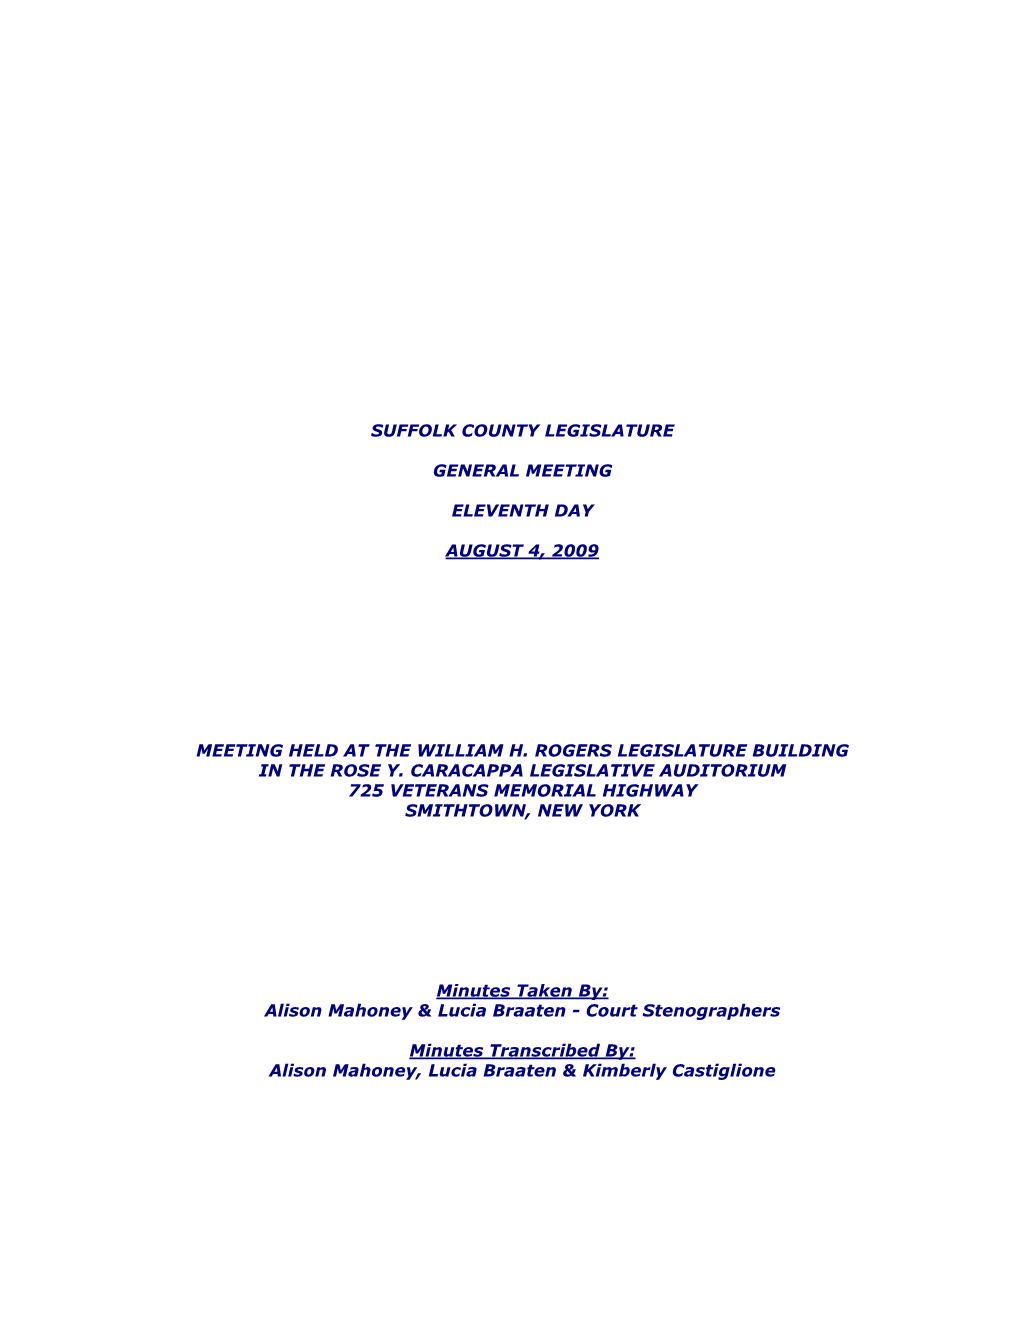 08/04/2009 General Meeting Minutes (PDF)